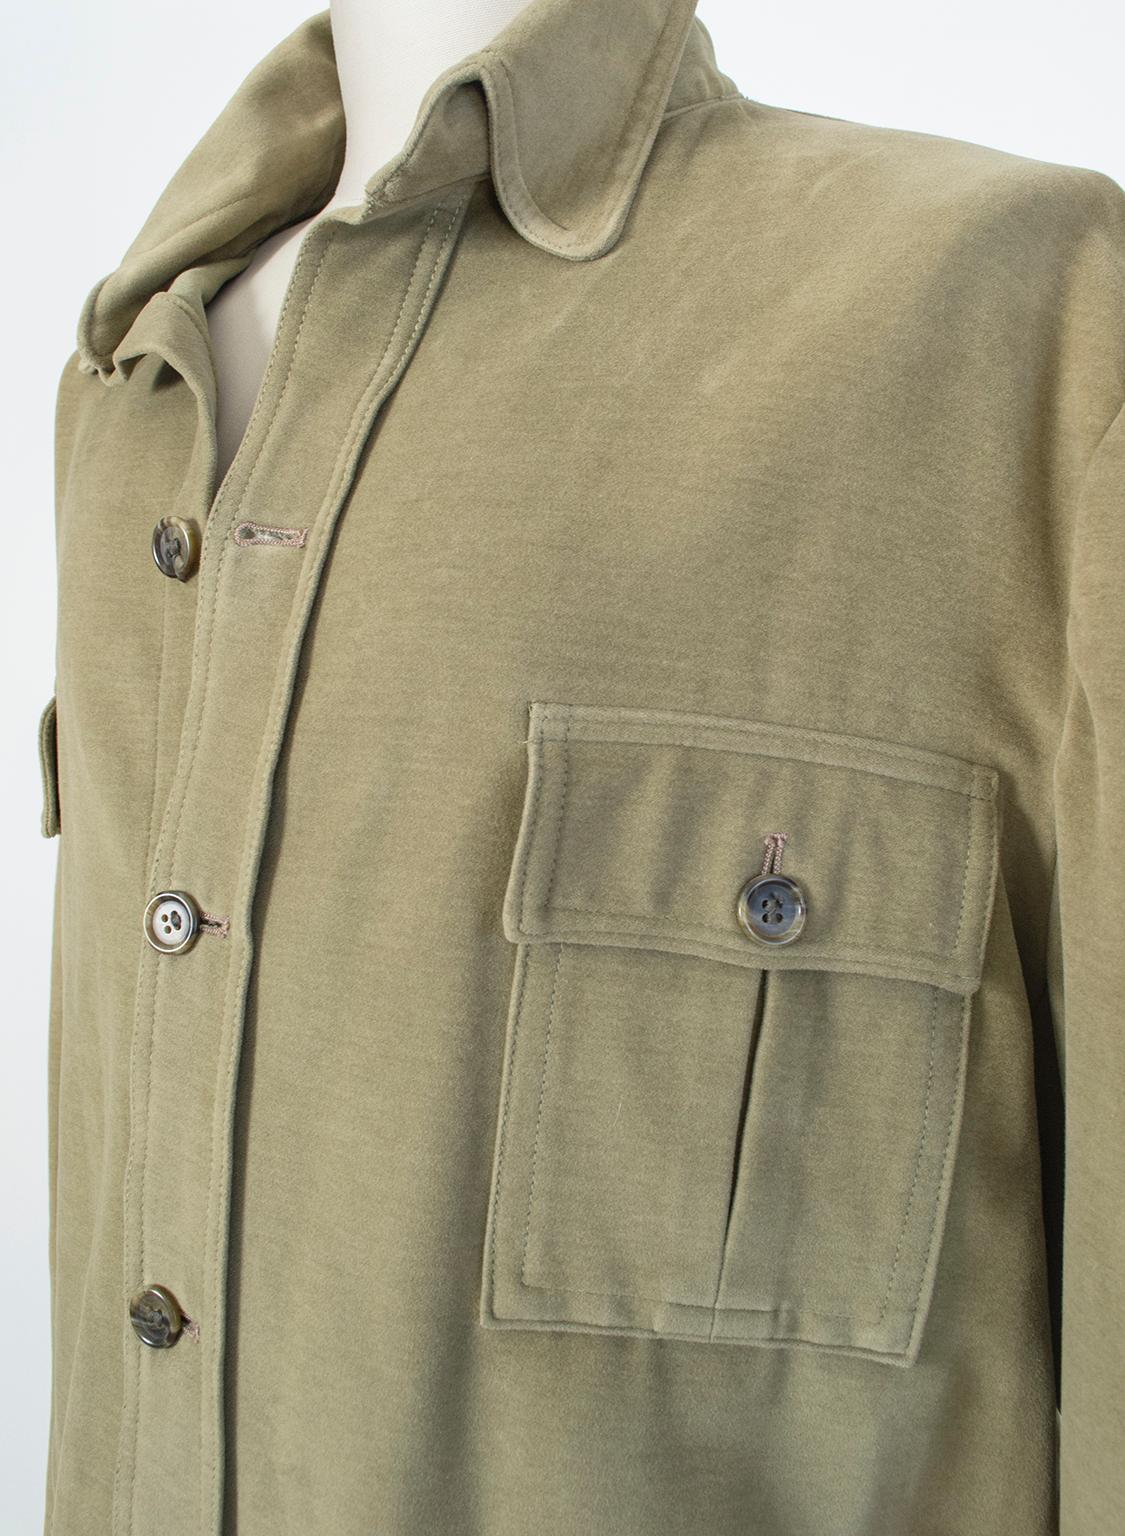 Men’s British Khaki Moleskin Norfolk Hunting Jacket and Trouser Set - XL, 1960s For Sale 8